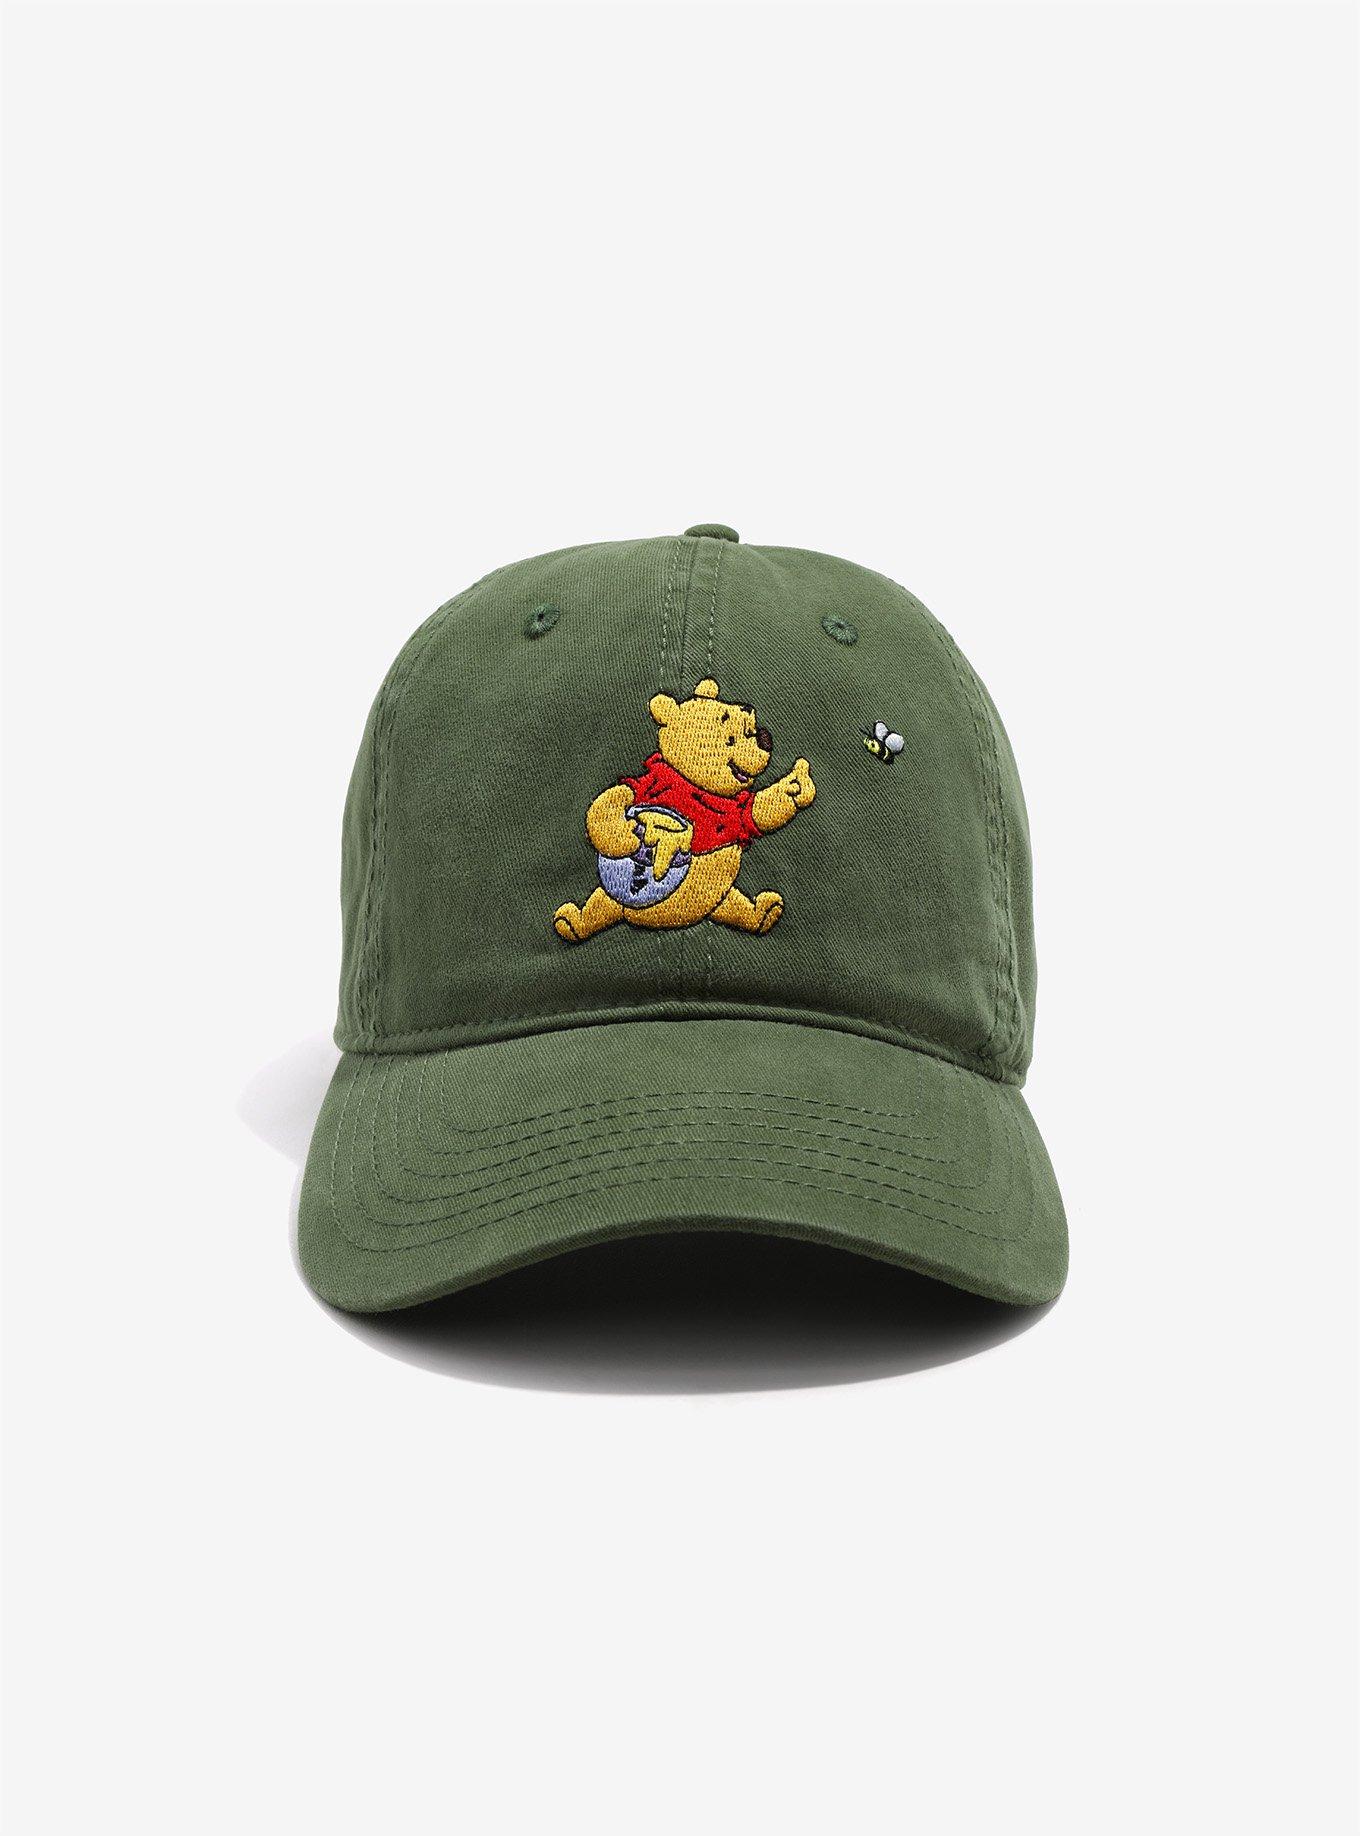 Disney: Winnie The Pooh - Honey Pot Dad Cap Hat